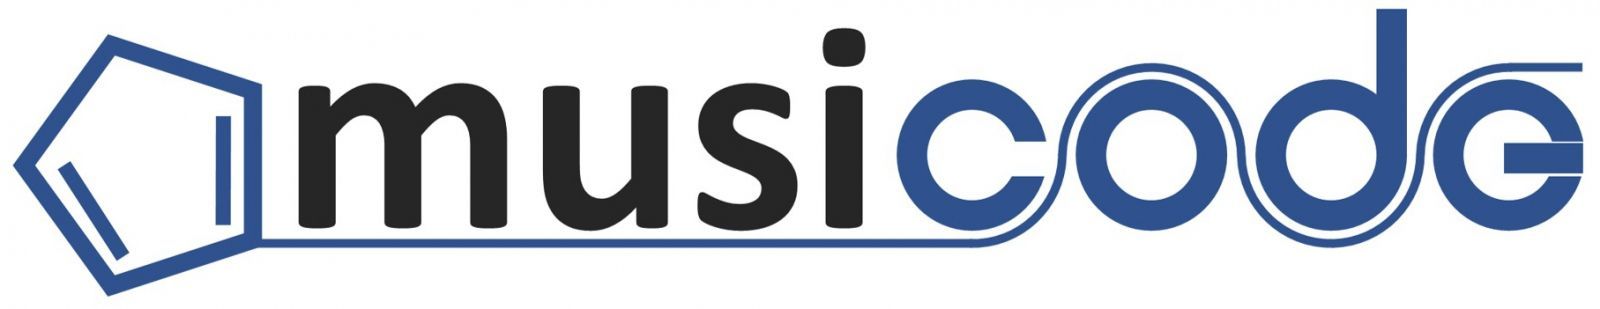 musicode-logo.jpeg